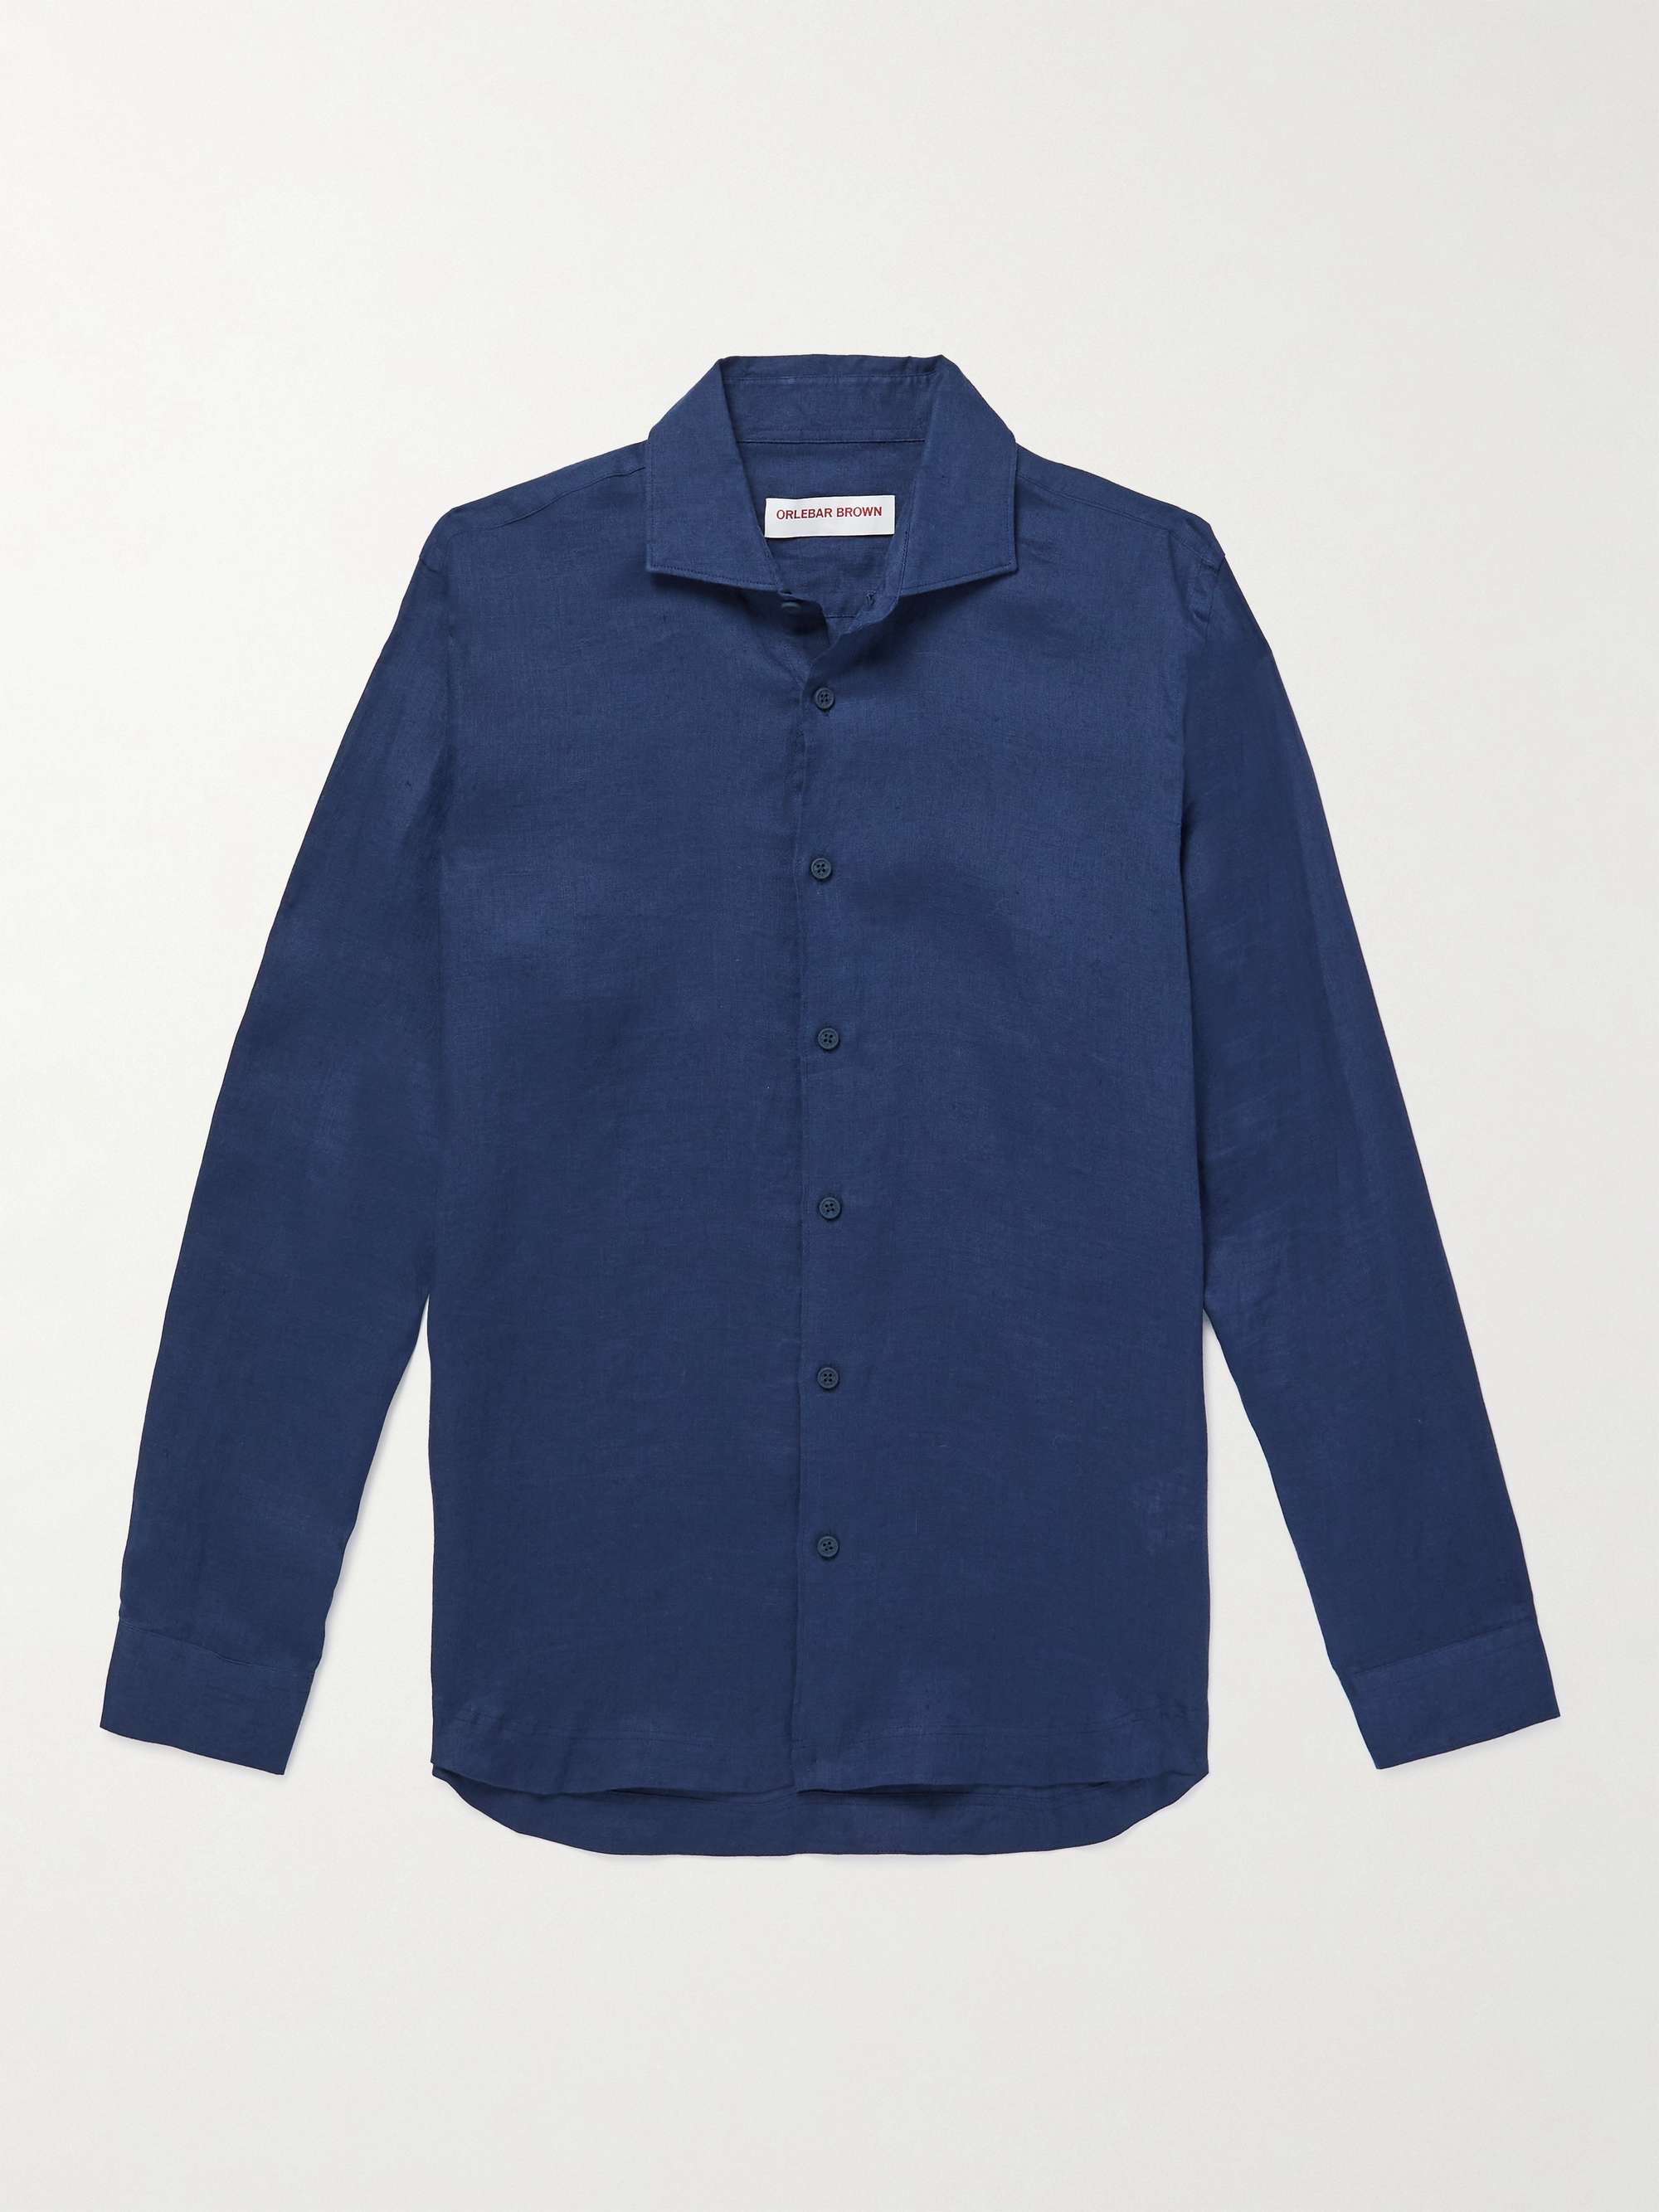 ORLEBAR BROWN Giles Slim-Fit Linen Shirt for Men | MR PORTER